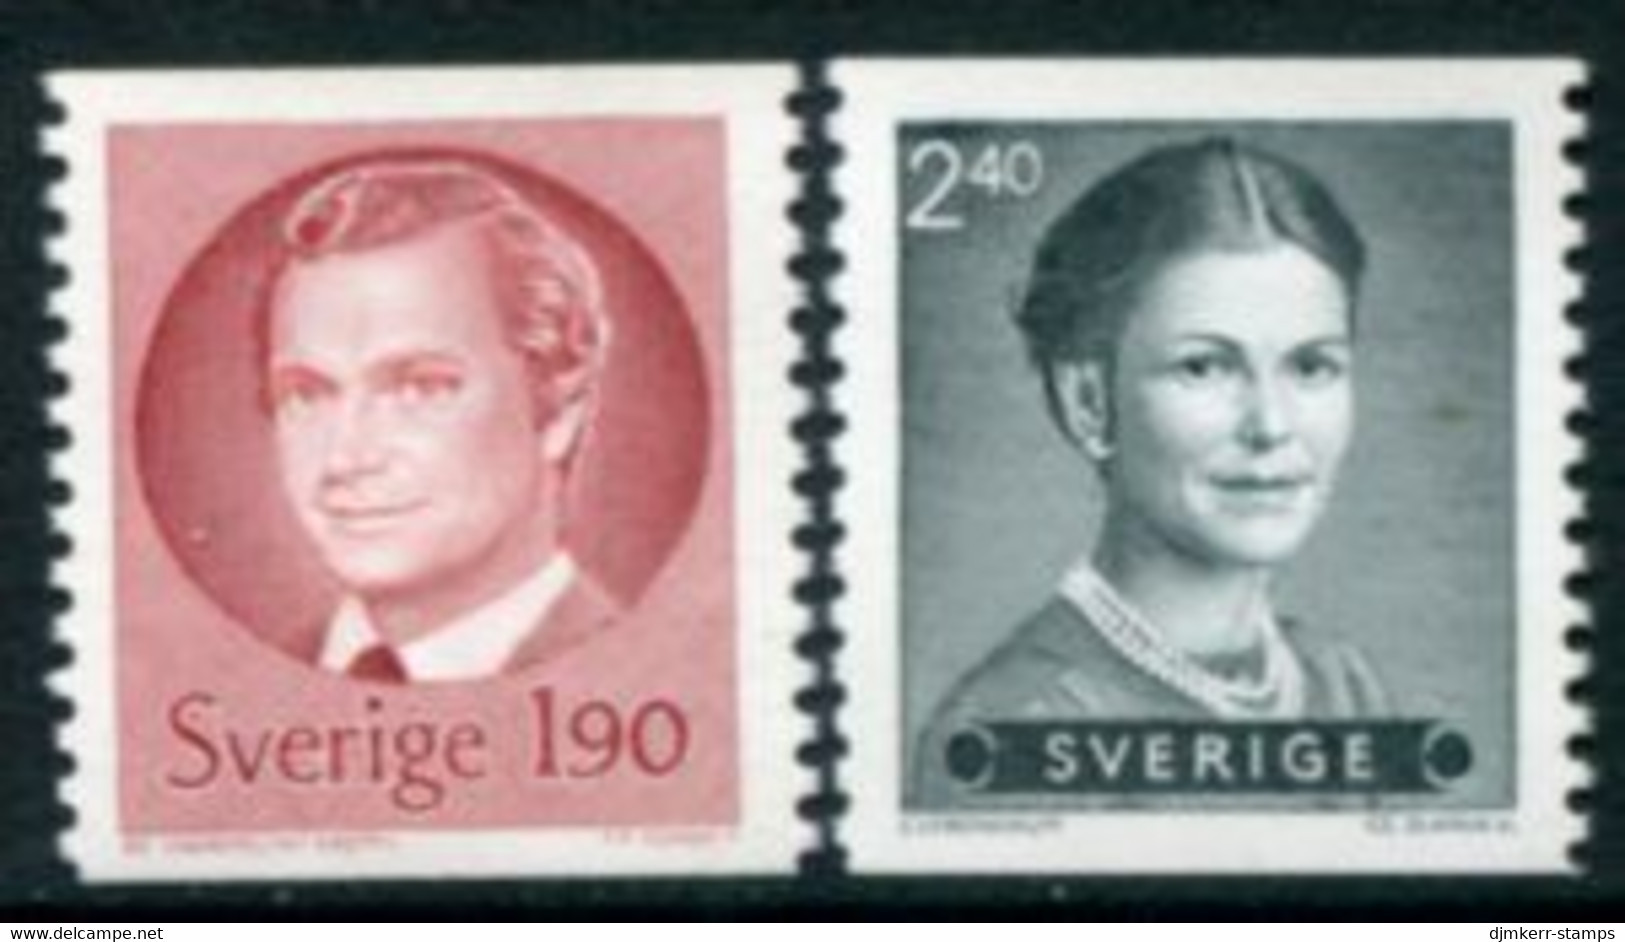 SWEDEN 1984 Definitive: King And Queen MNH / **.  Michel 1276-77 - Ungebraucht